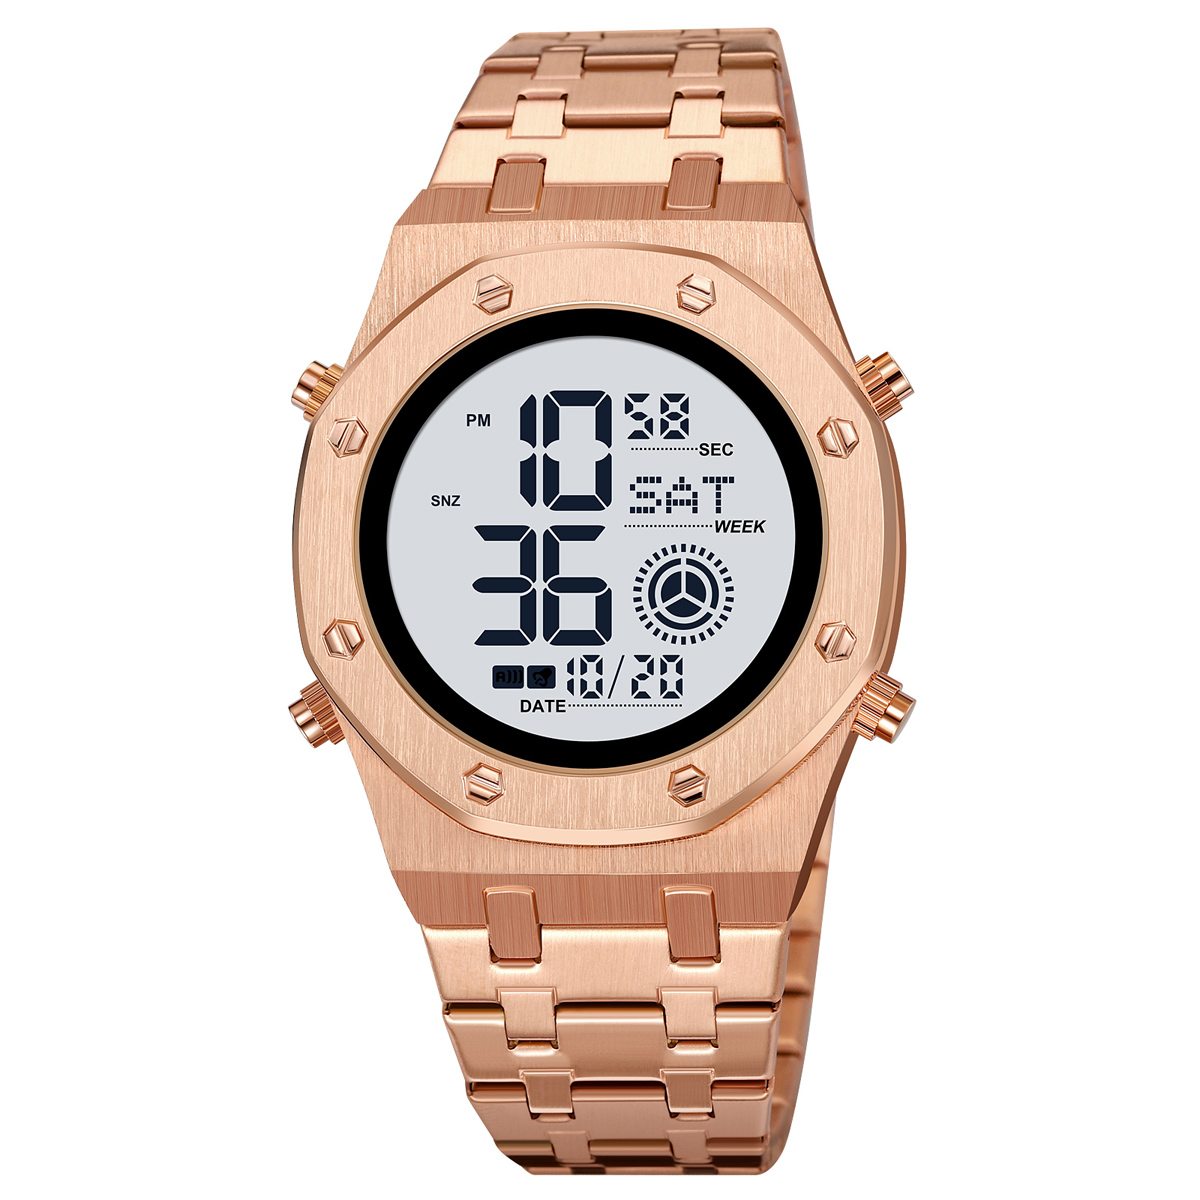 Digital watches men-Skmei Watch Manufacture Co.,Ltd